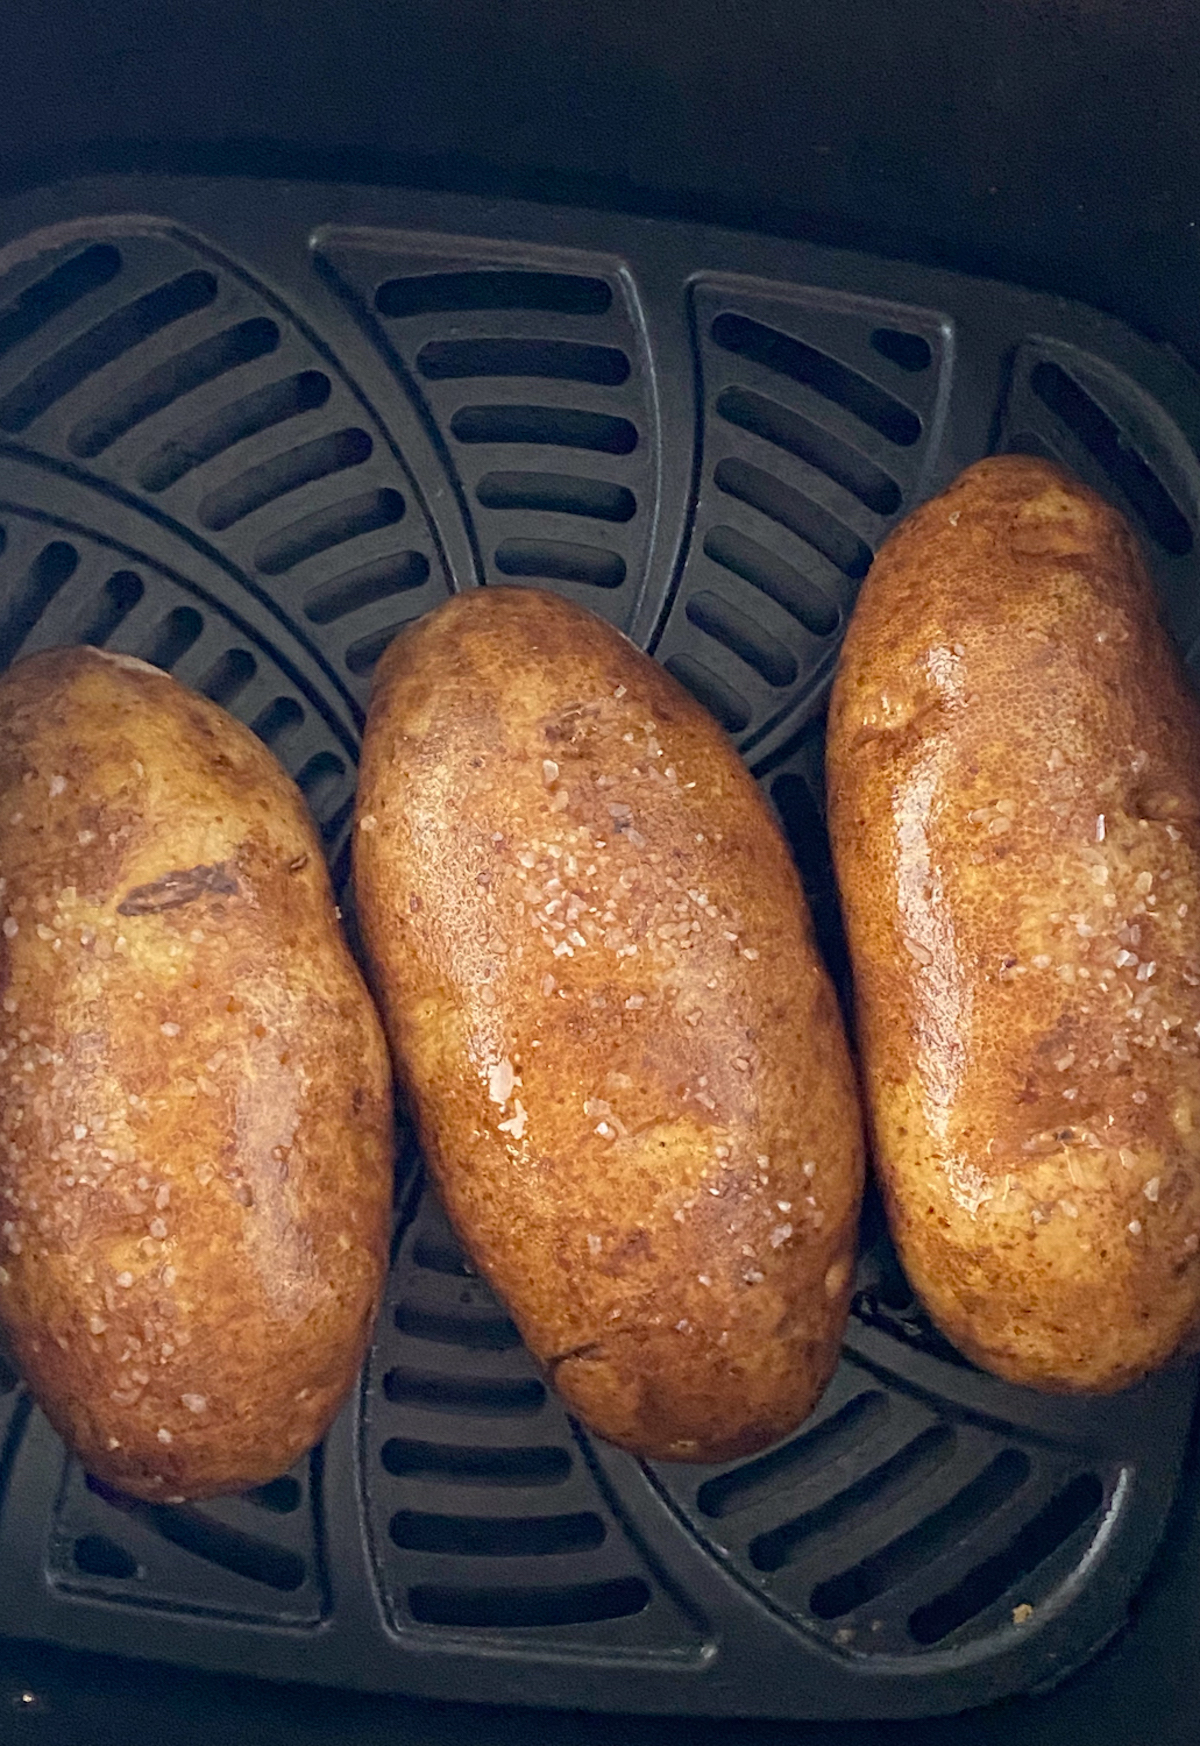 russet potatoes in air fryer basket